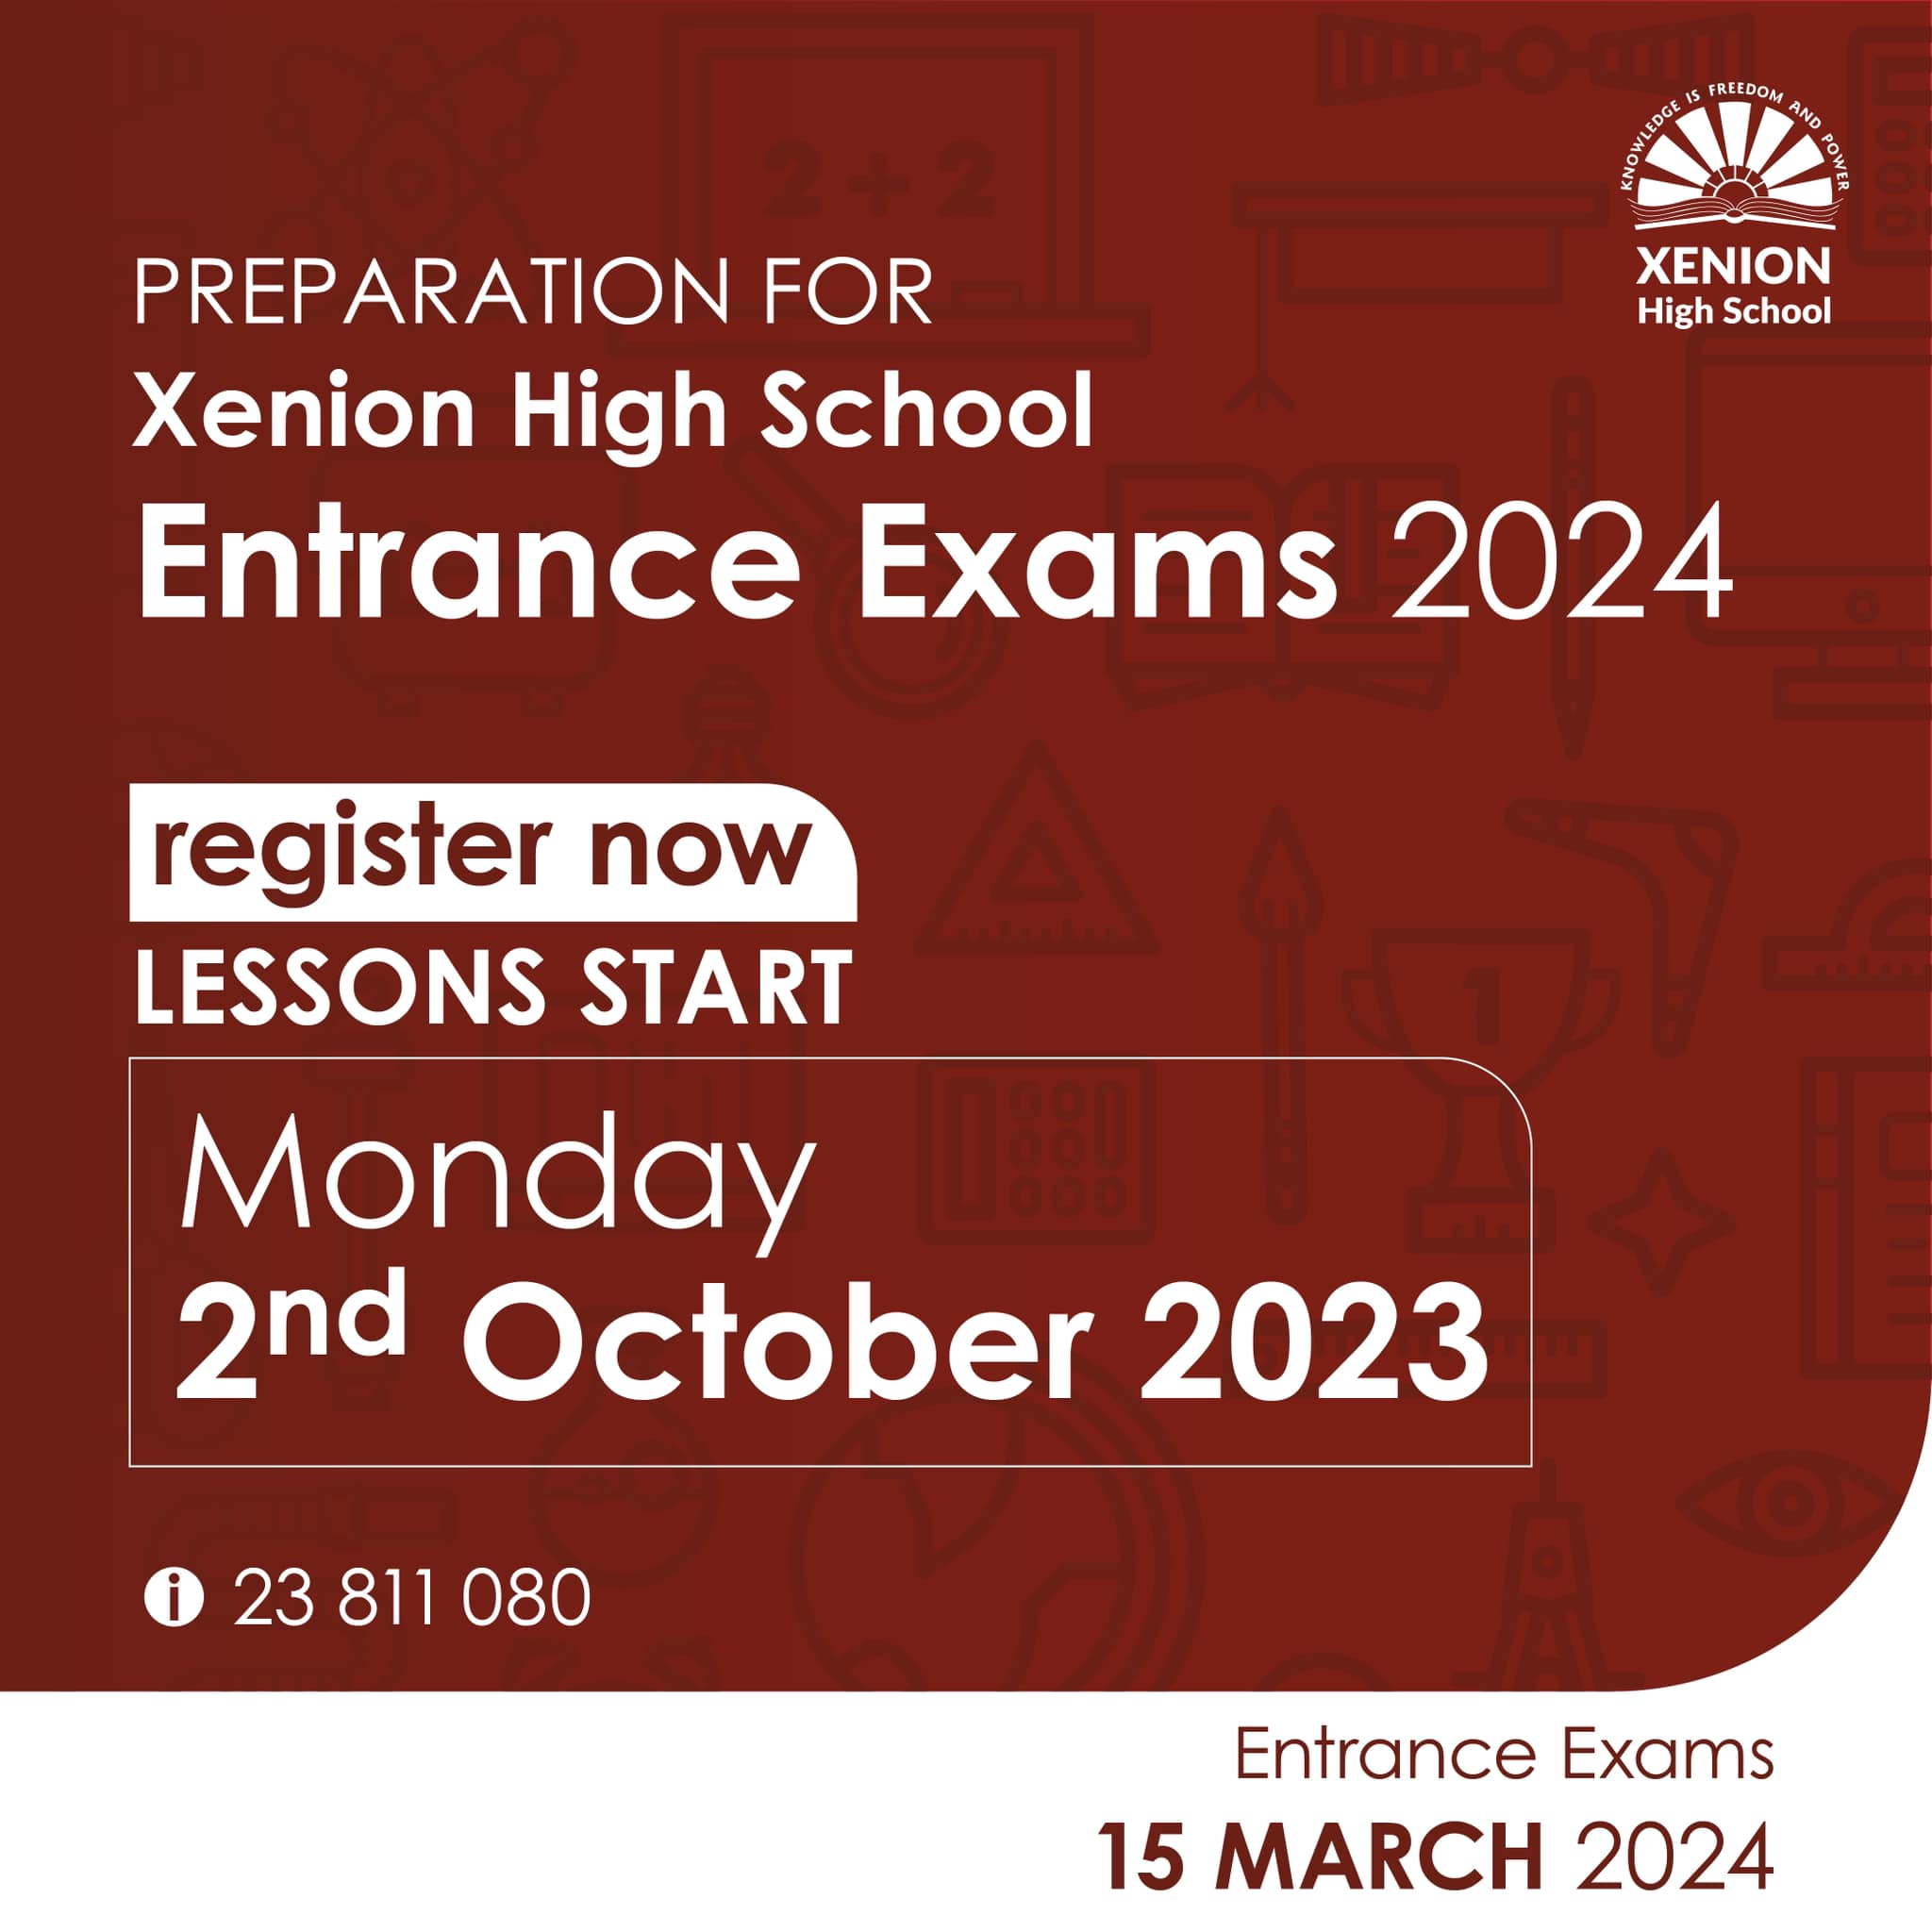 PREPARATION FOR ENTRANCE EXAMS 2024